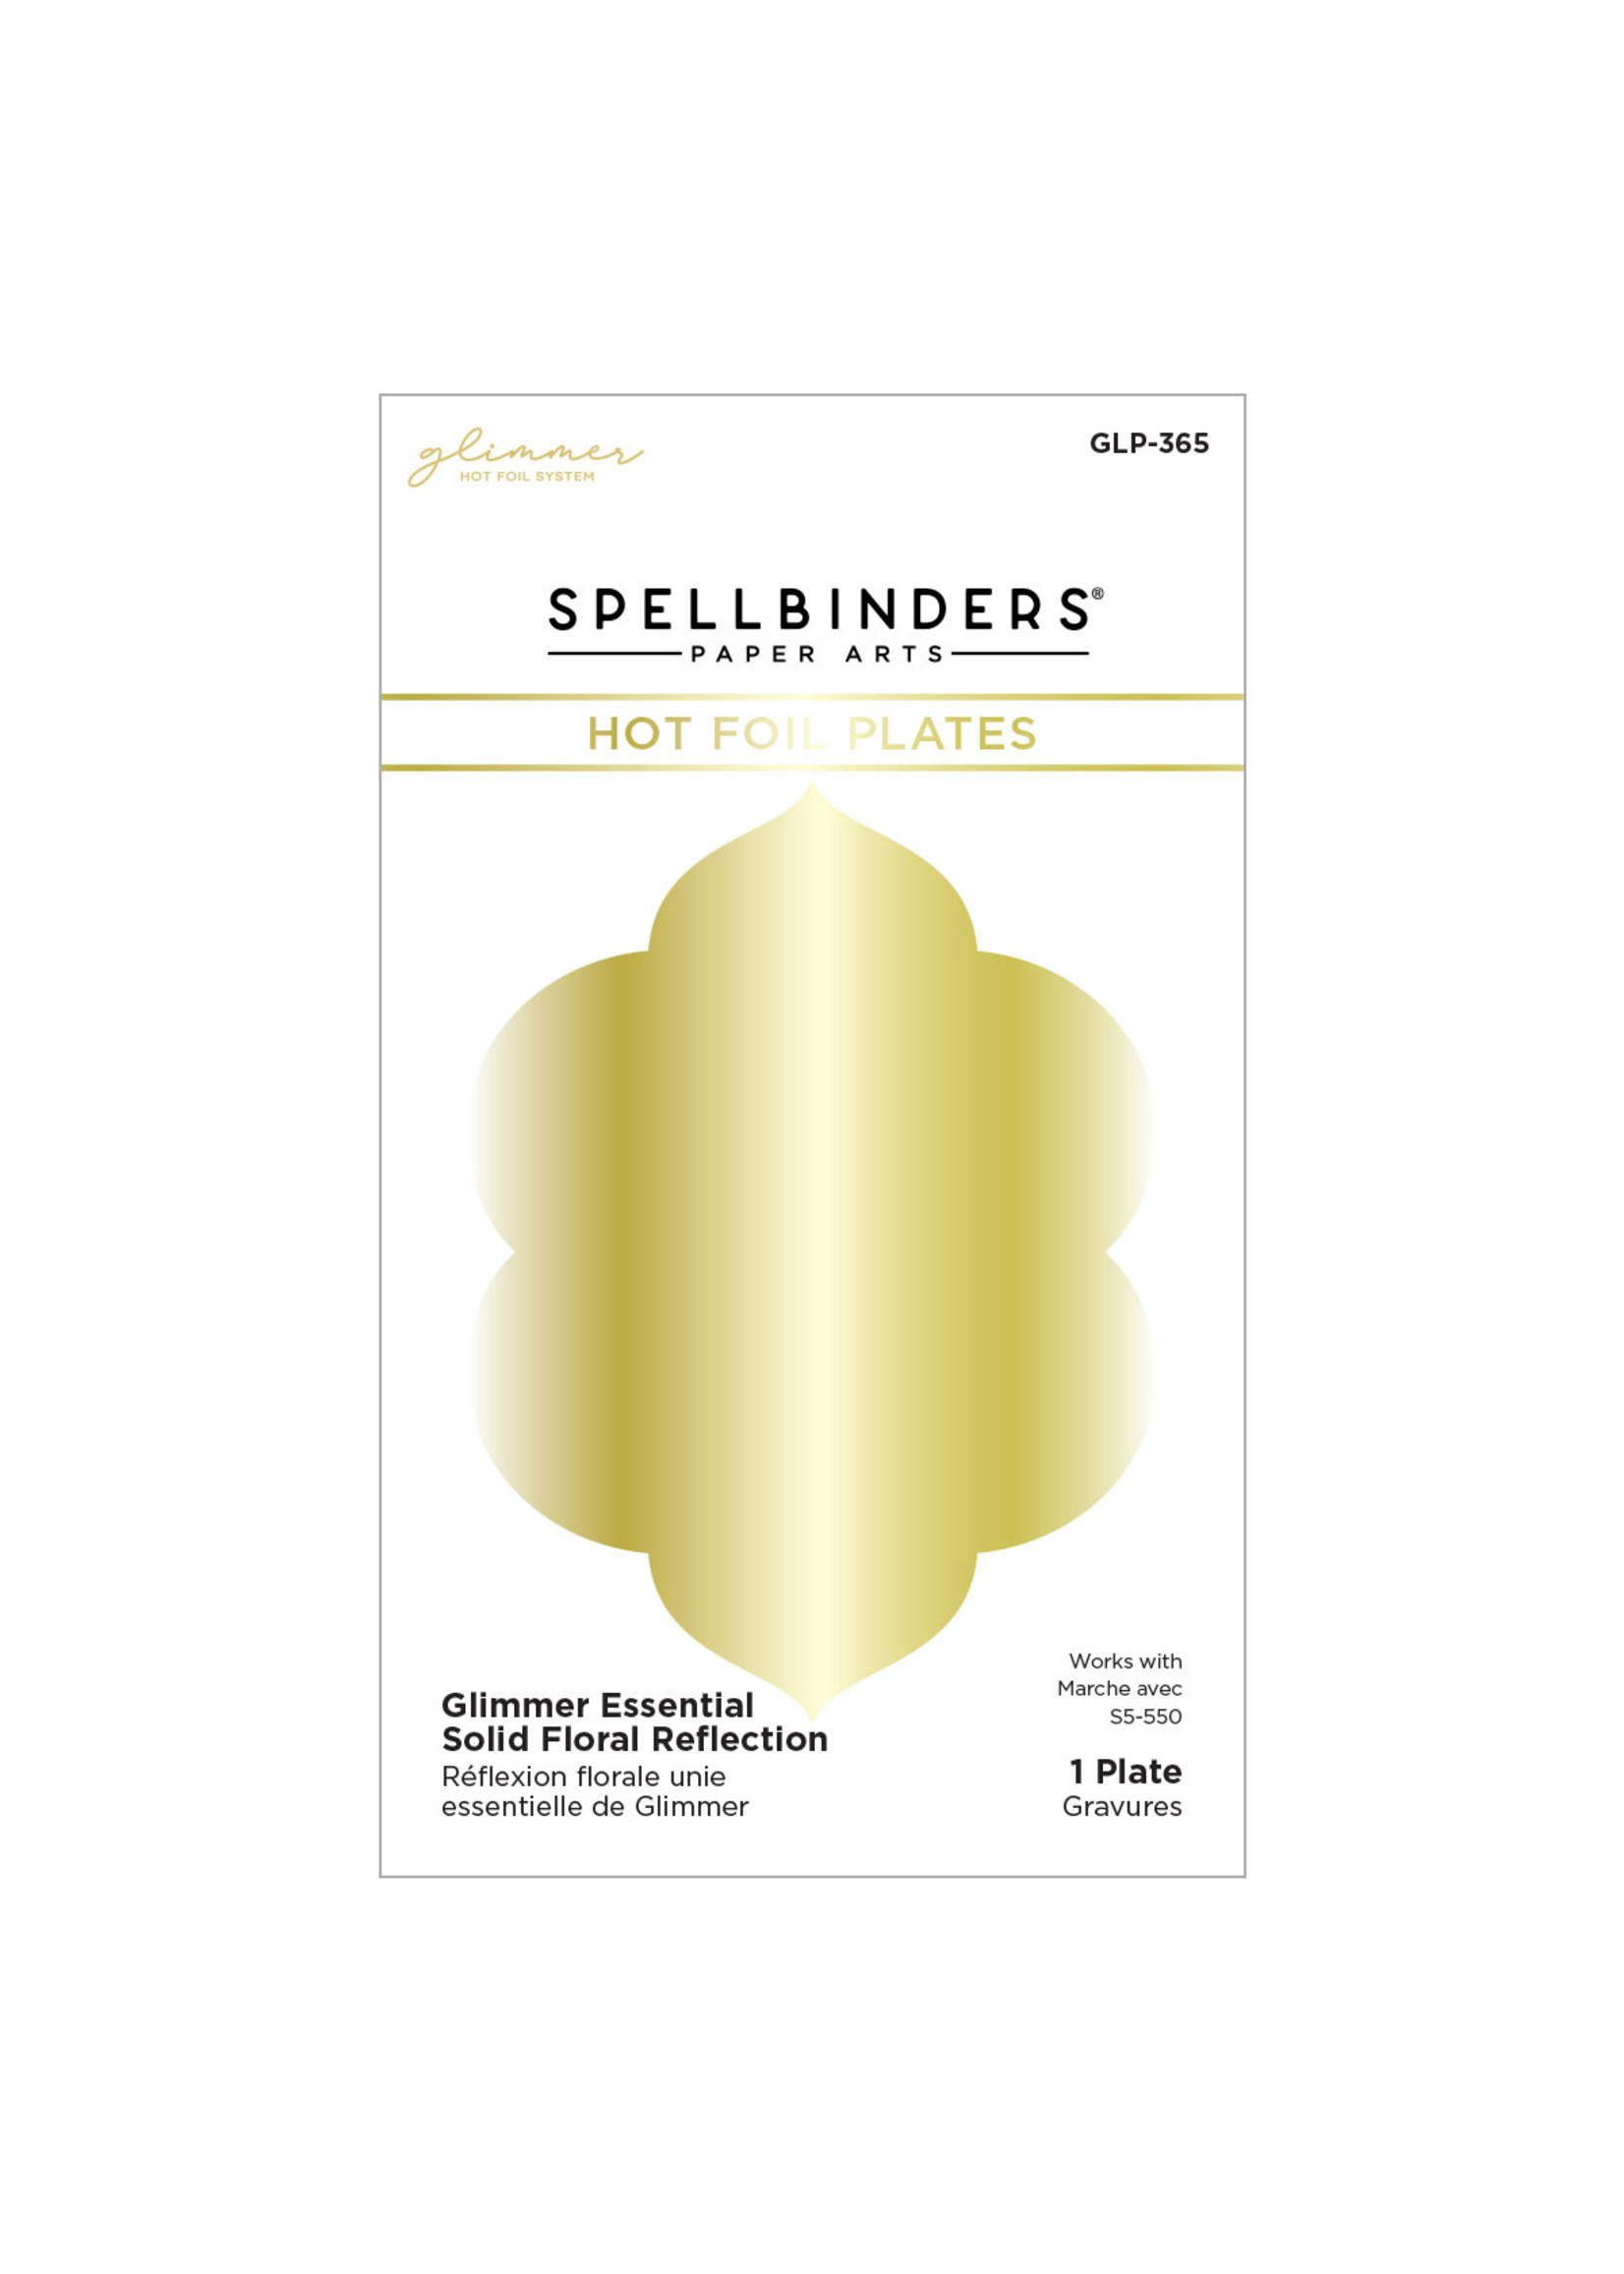 spellbinders Glimmer Essential Solid Floral Reflection Glimmer Hot Foil Plate